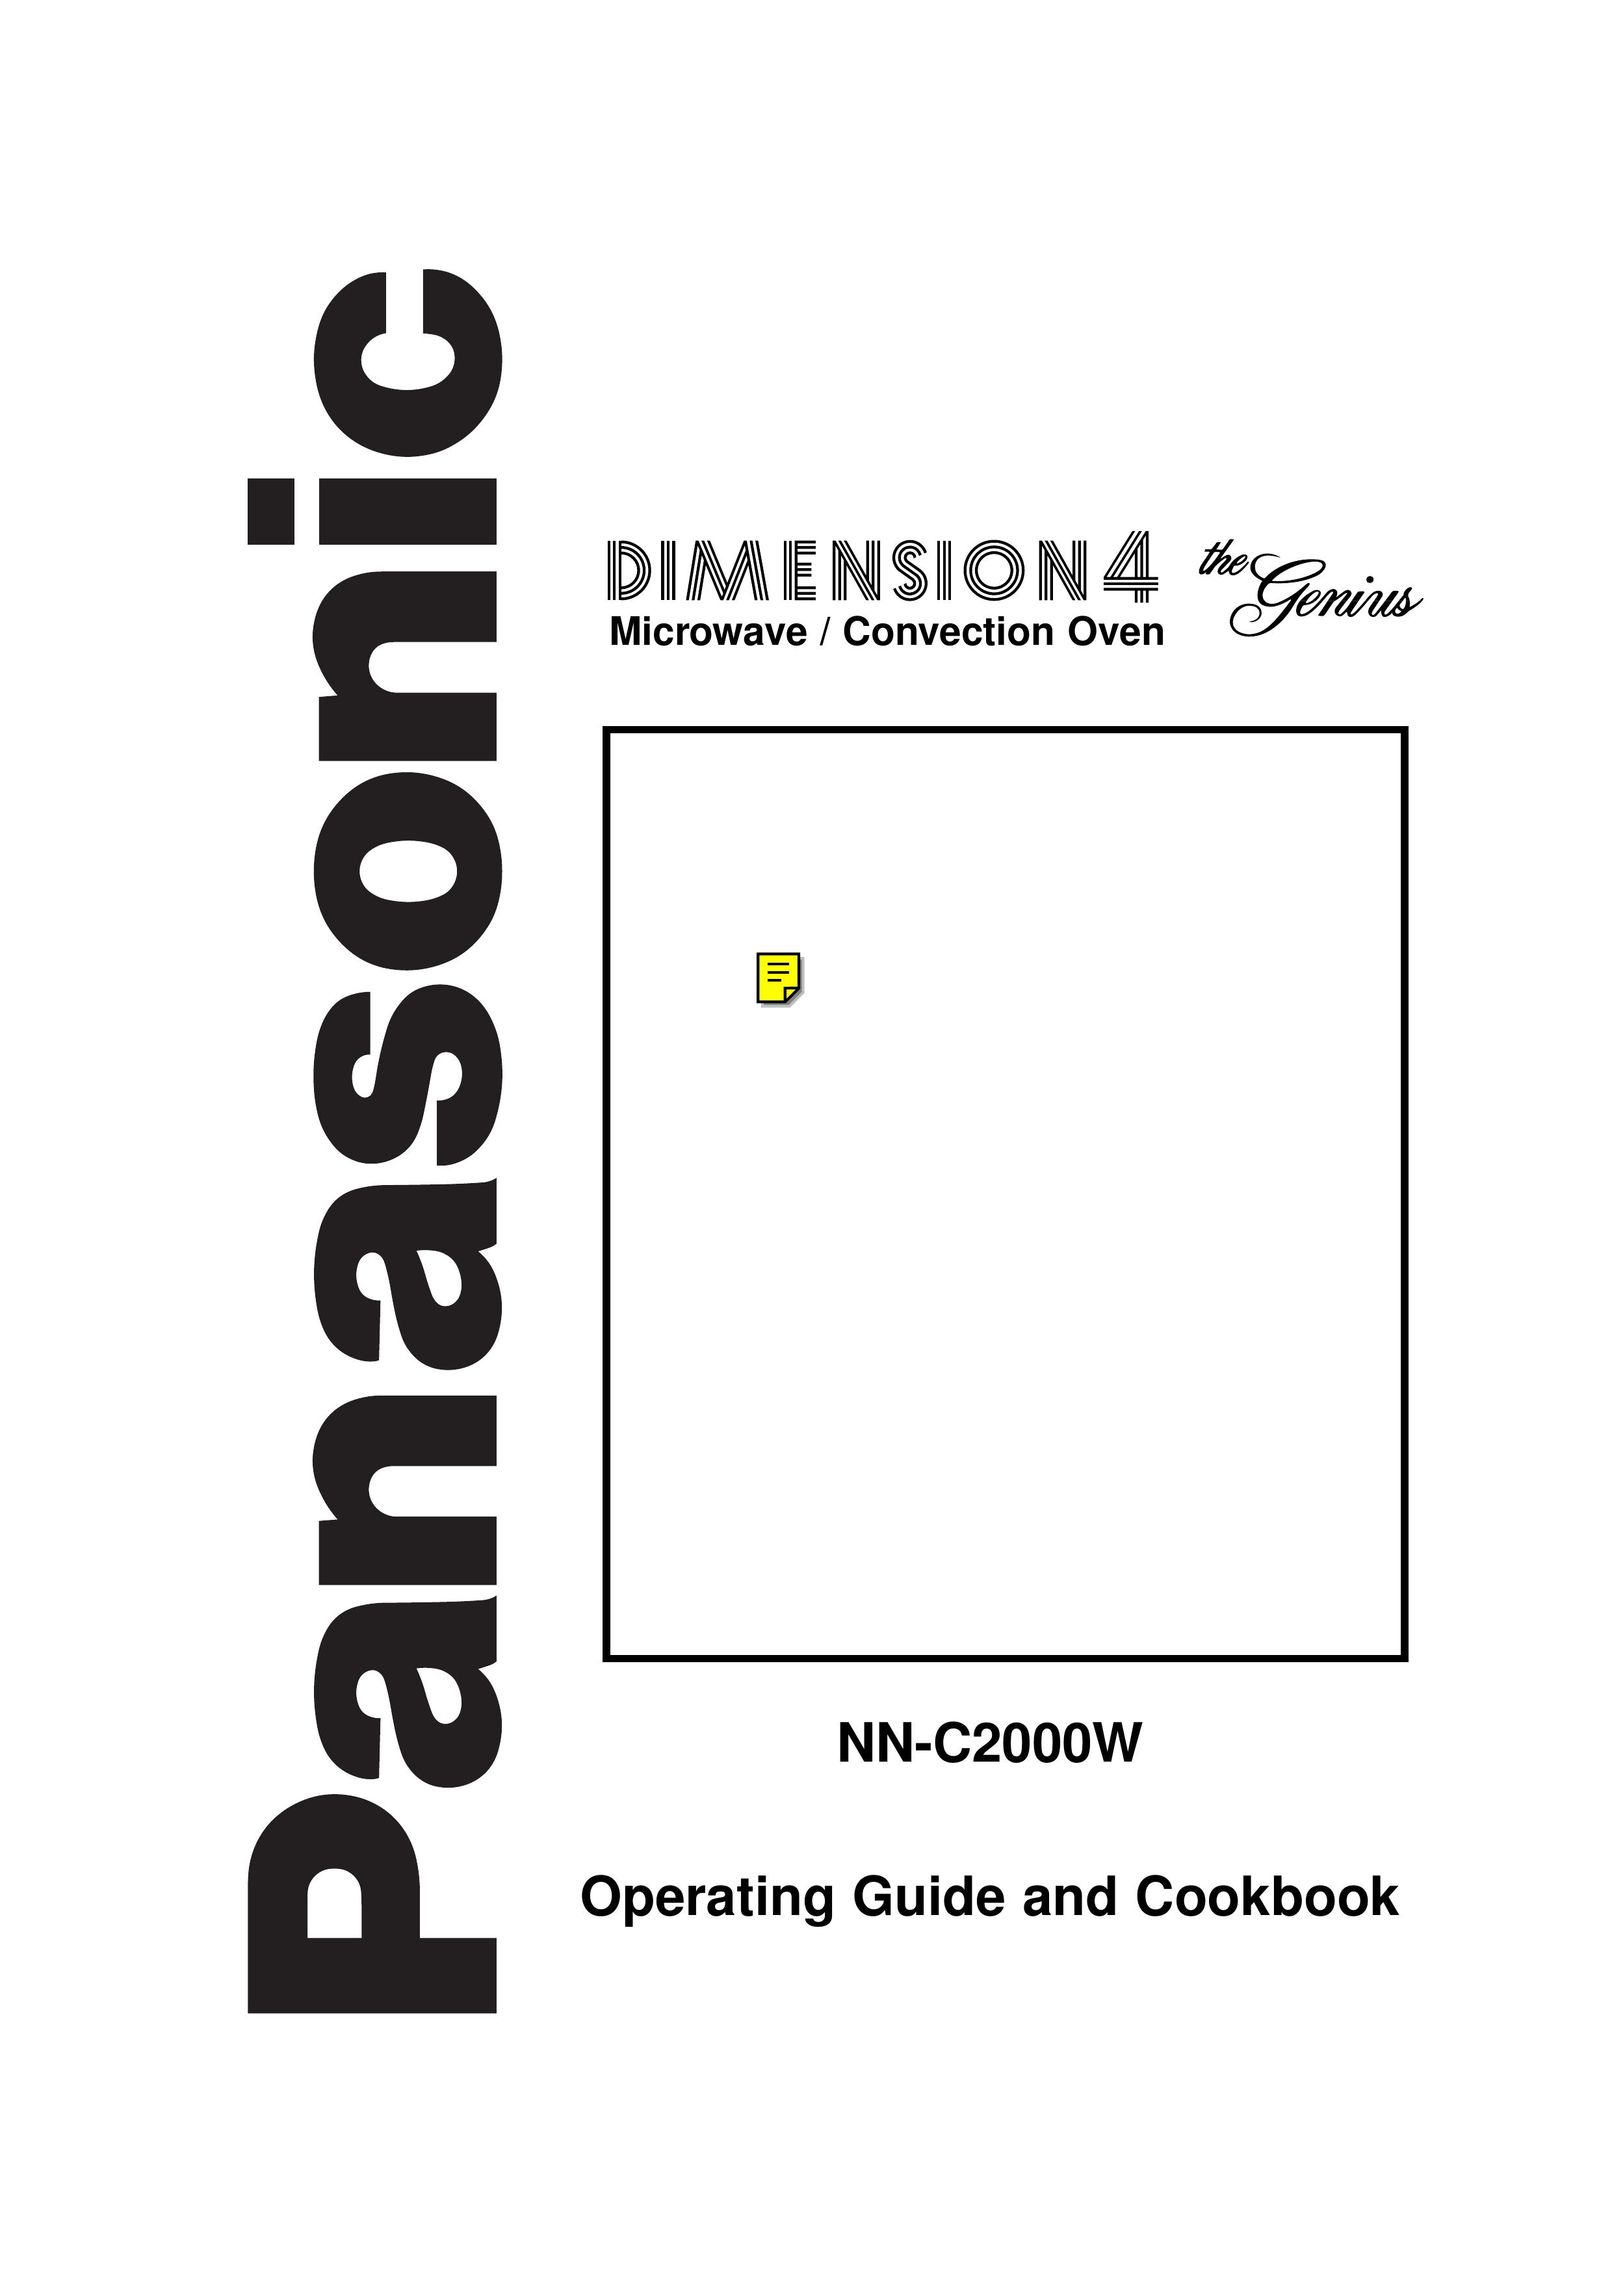 Panasonic NN-C2000W Convection Oven User Manual